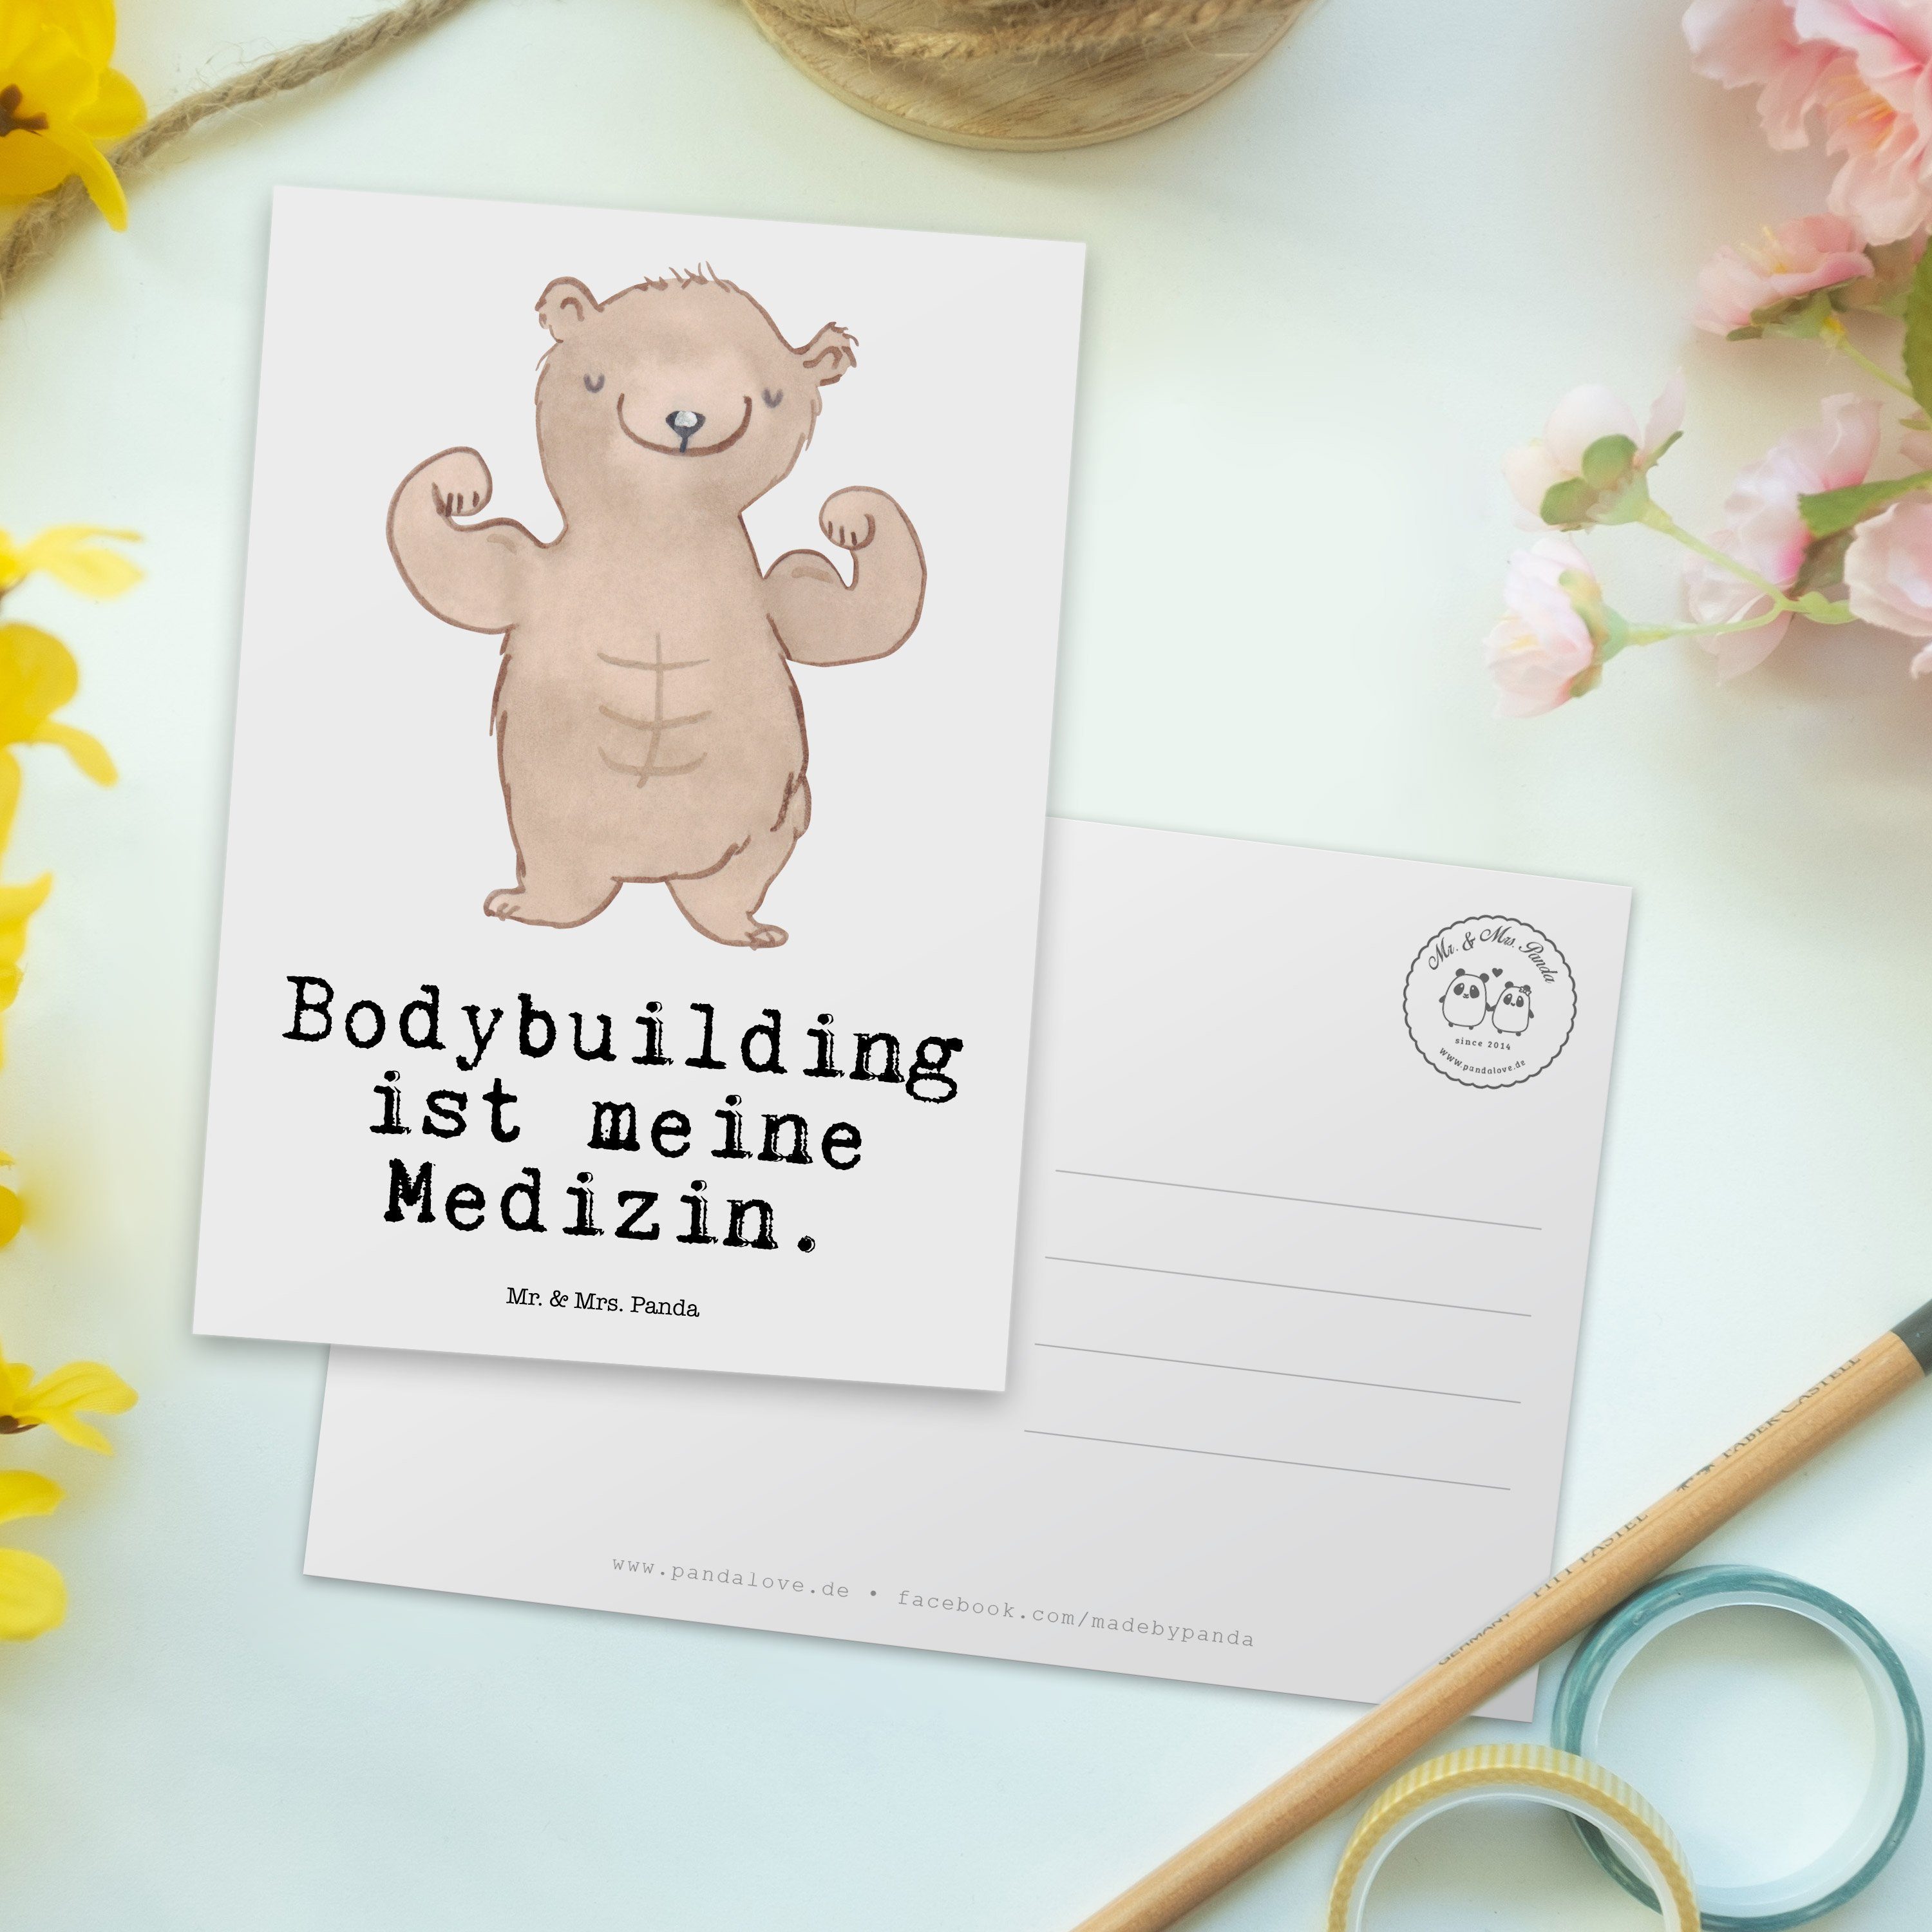 Mr. & Mrs. Panda Postkarte Bodybuilding Einladungskarte, Geschenk, Medizin Dankeska - - Weiß Bär